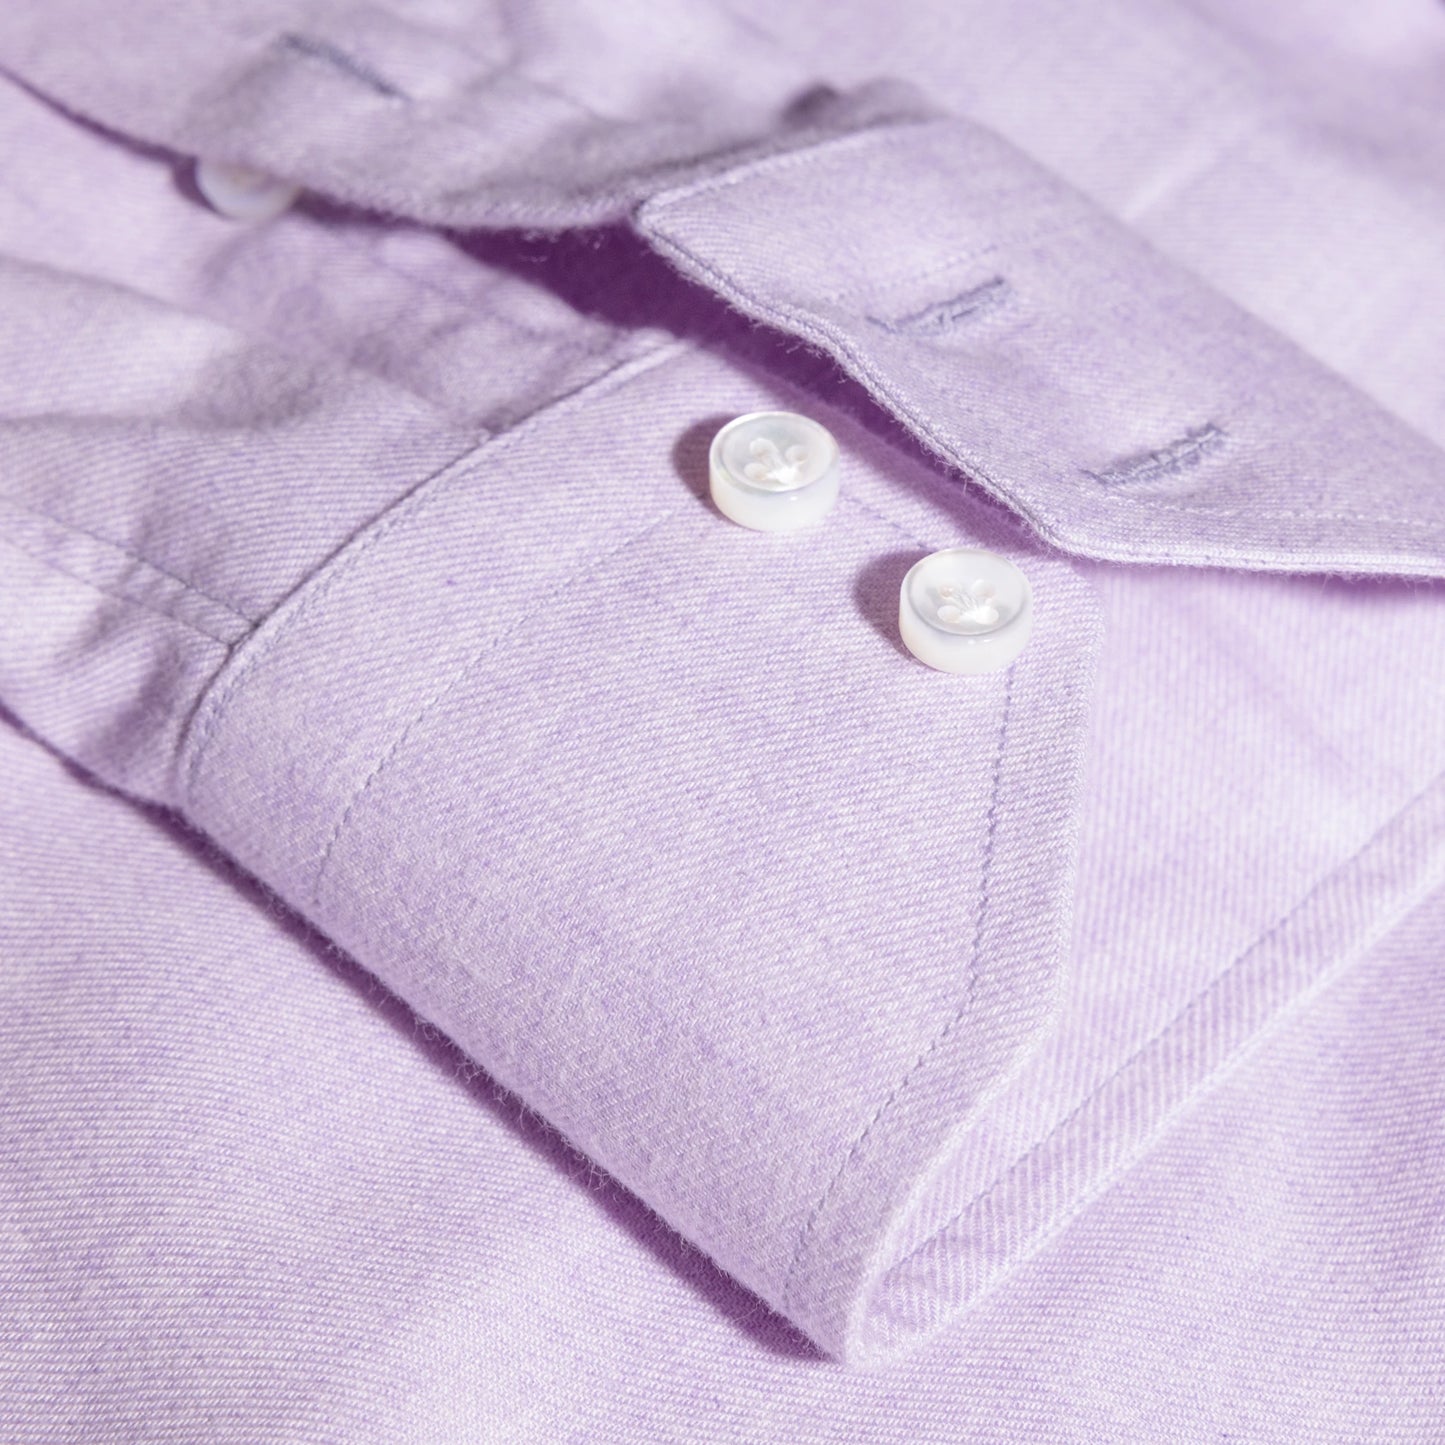 Shirt Warsaw purple Swiss Cotton and Cashmere